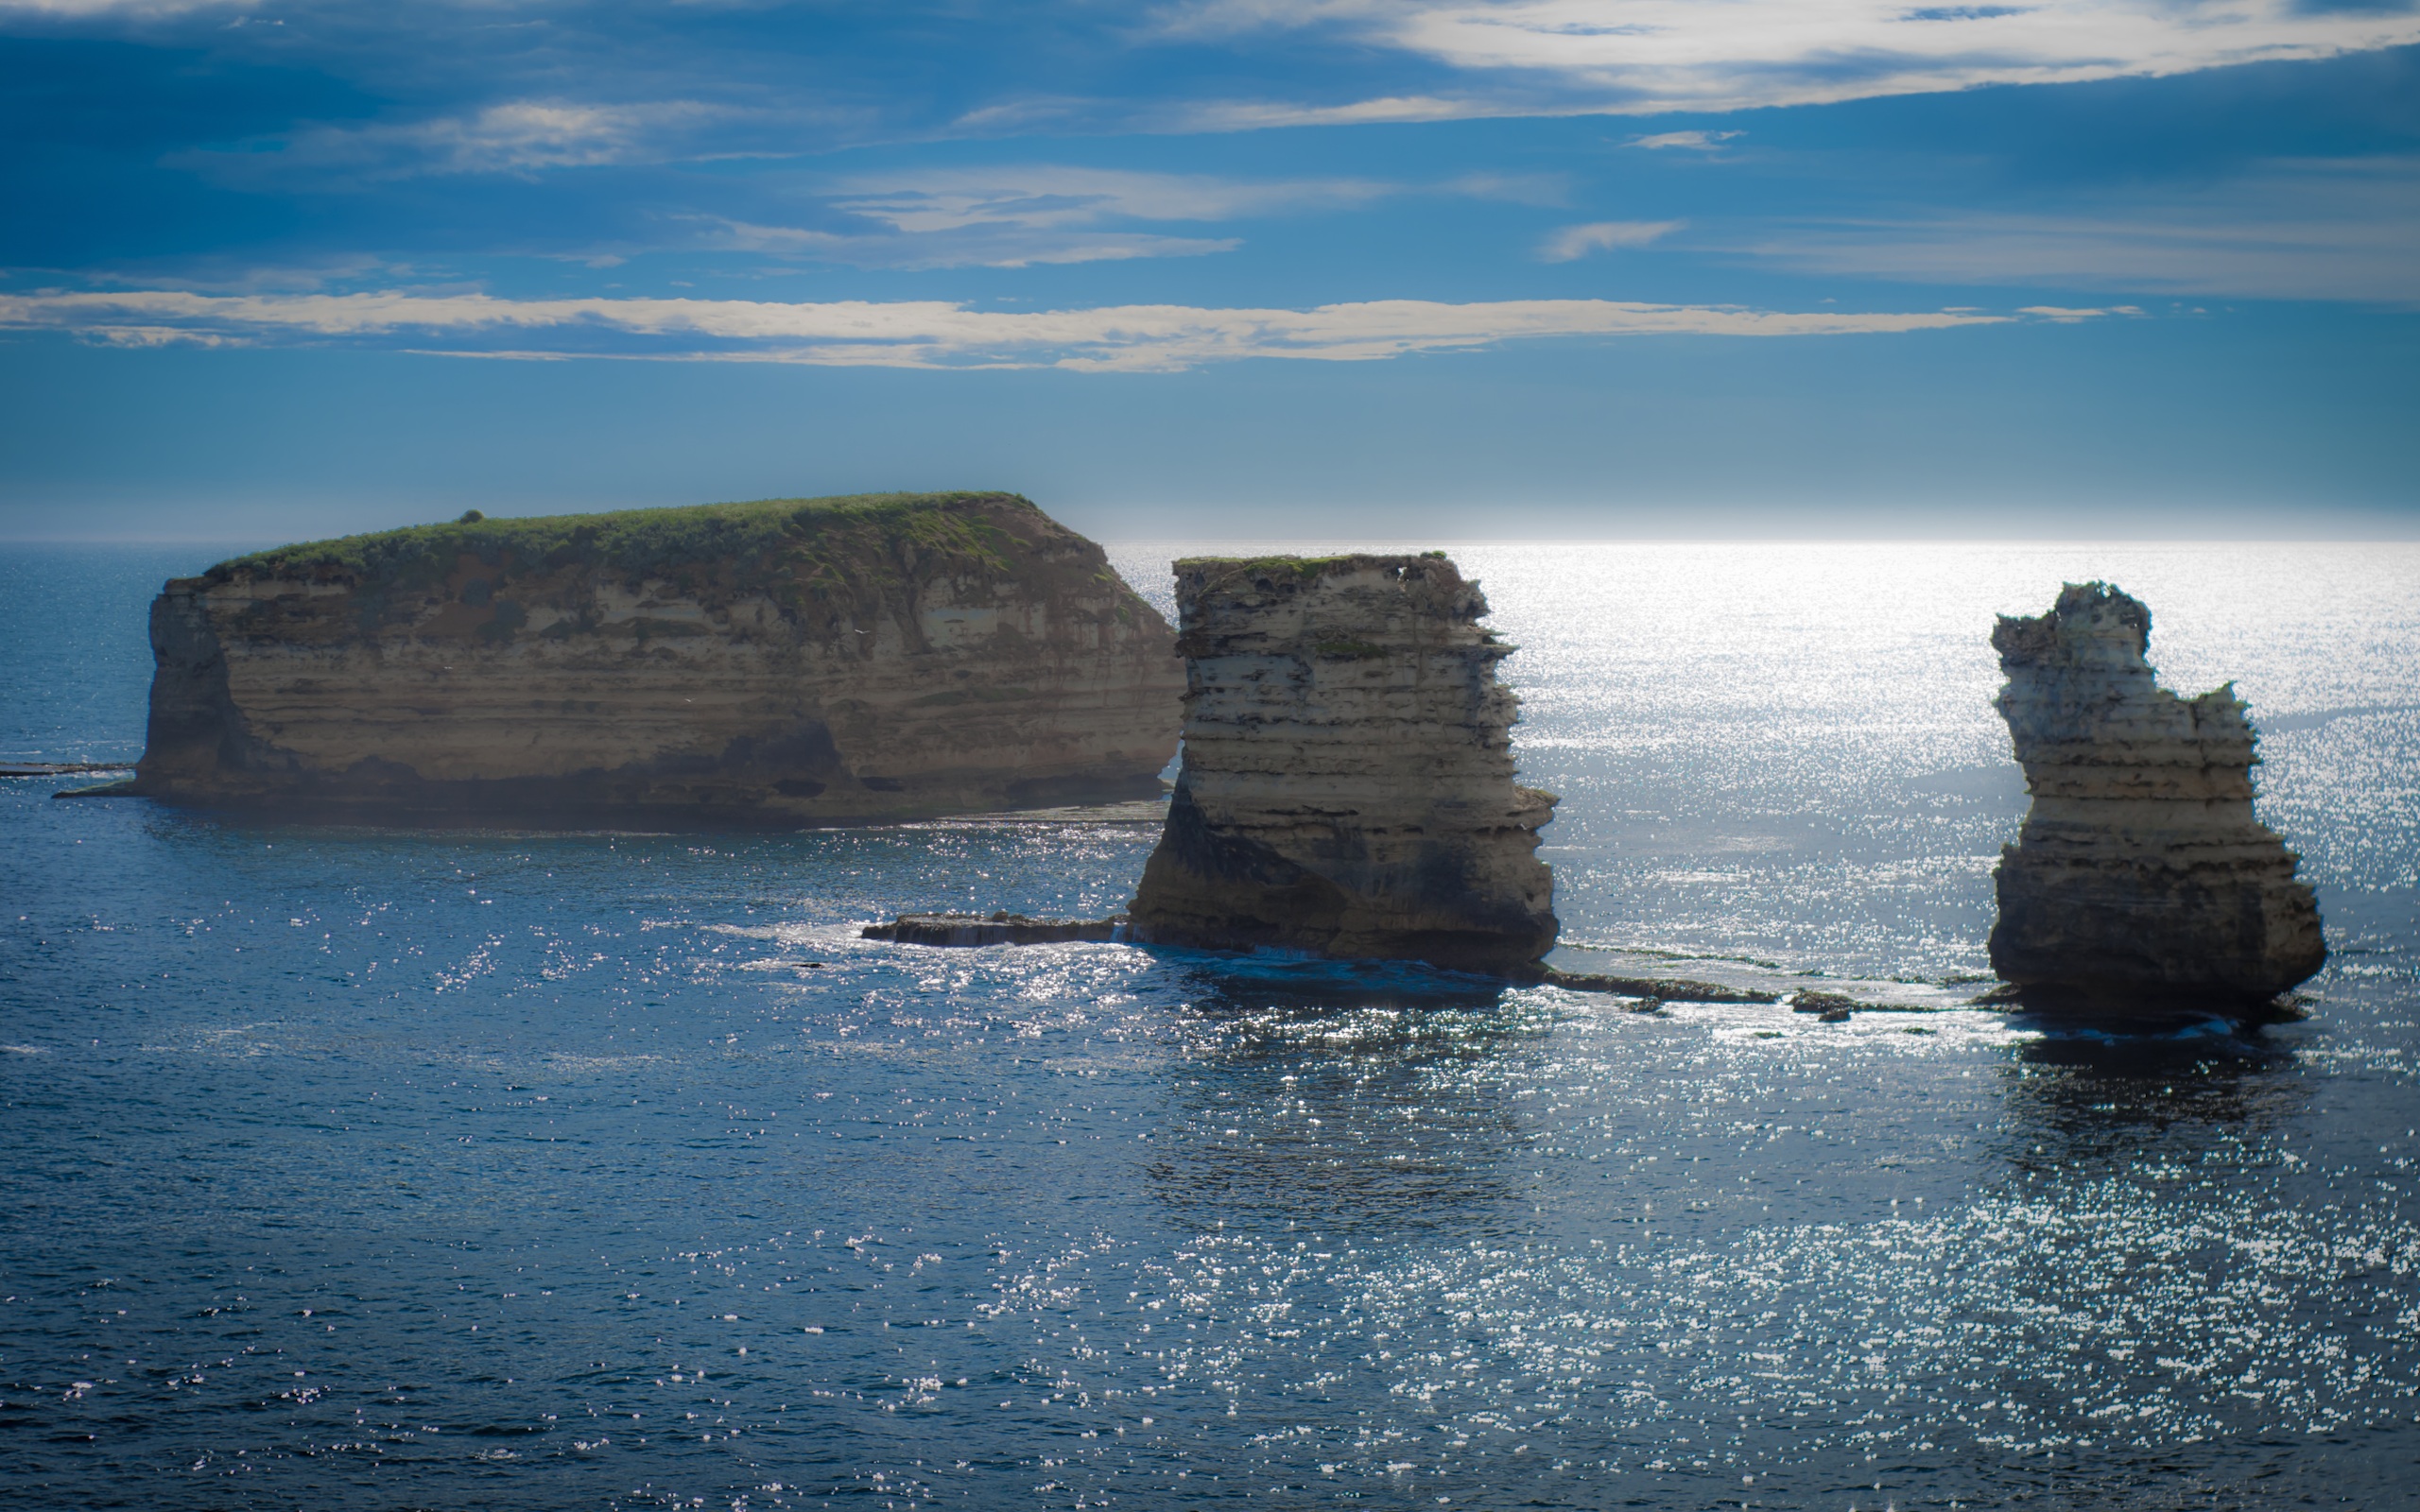 Scenic desktop wallpaper showcasing the picturesque Bay of Beauty in Australia.